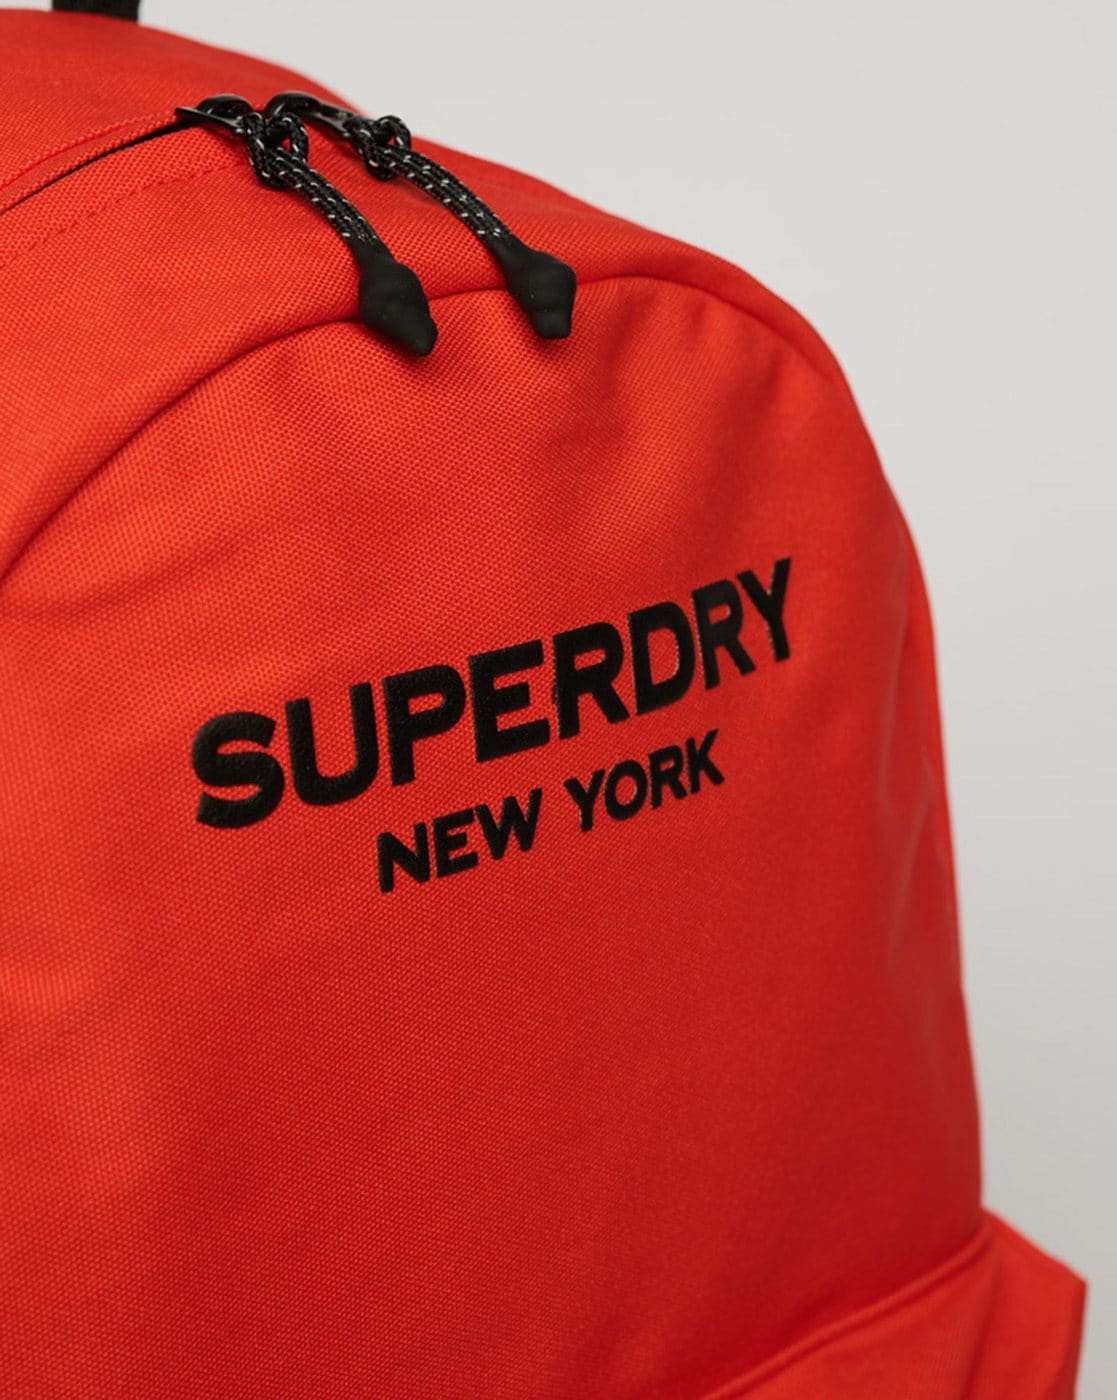 Superdry Marl Montana Backpack Orange - Price in India